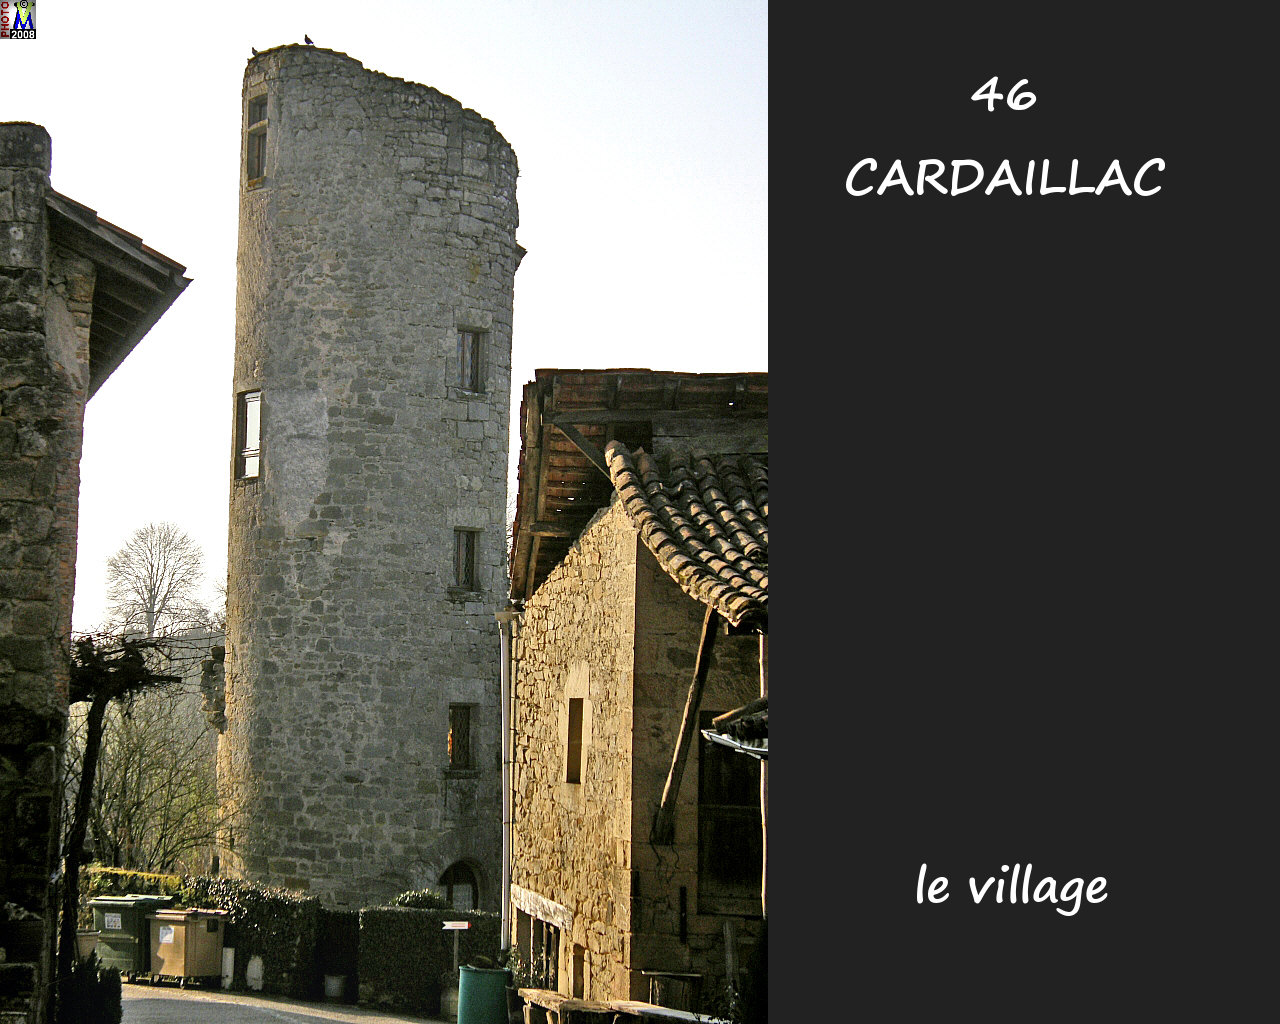 46CARDAILLAC_village_120.jpg